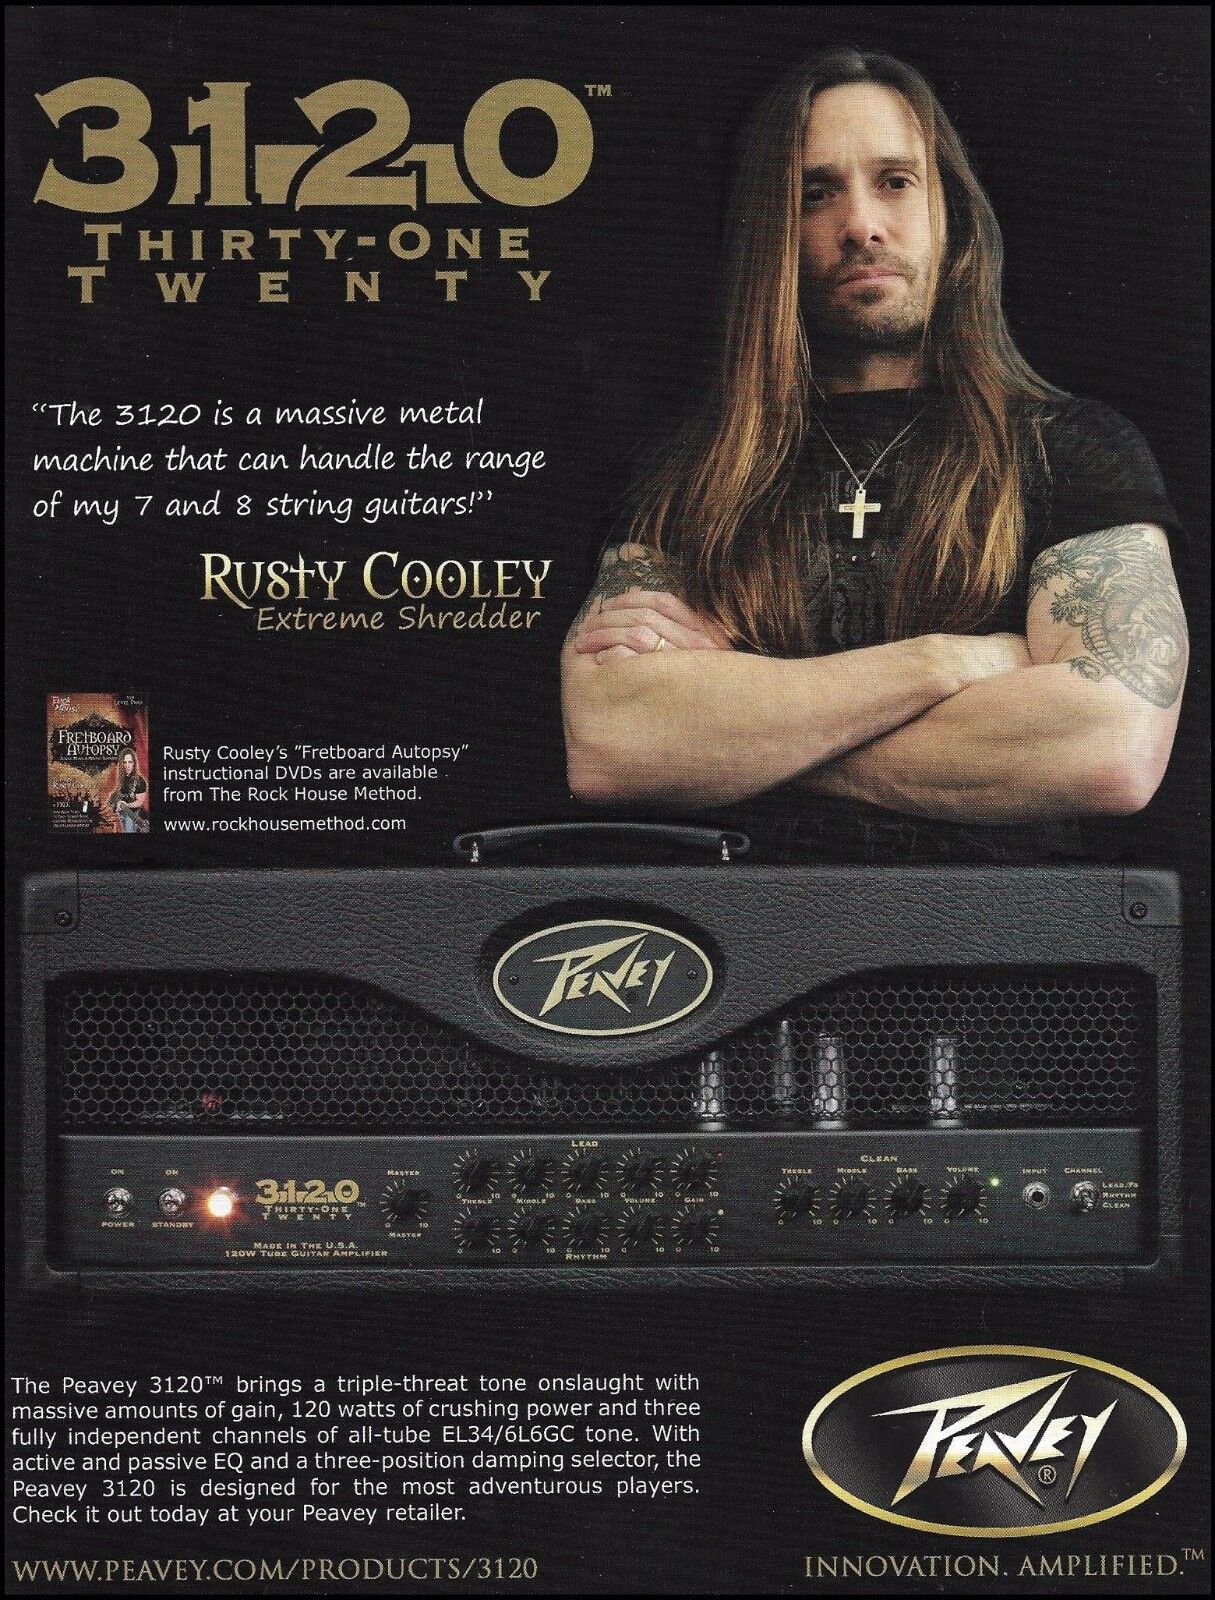 Rusty Cooley Peavey 3120 Thirty-One Twenty guitar amp ad 2009 advertisement